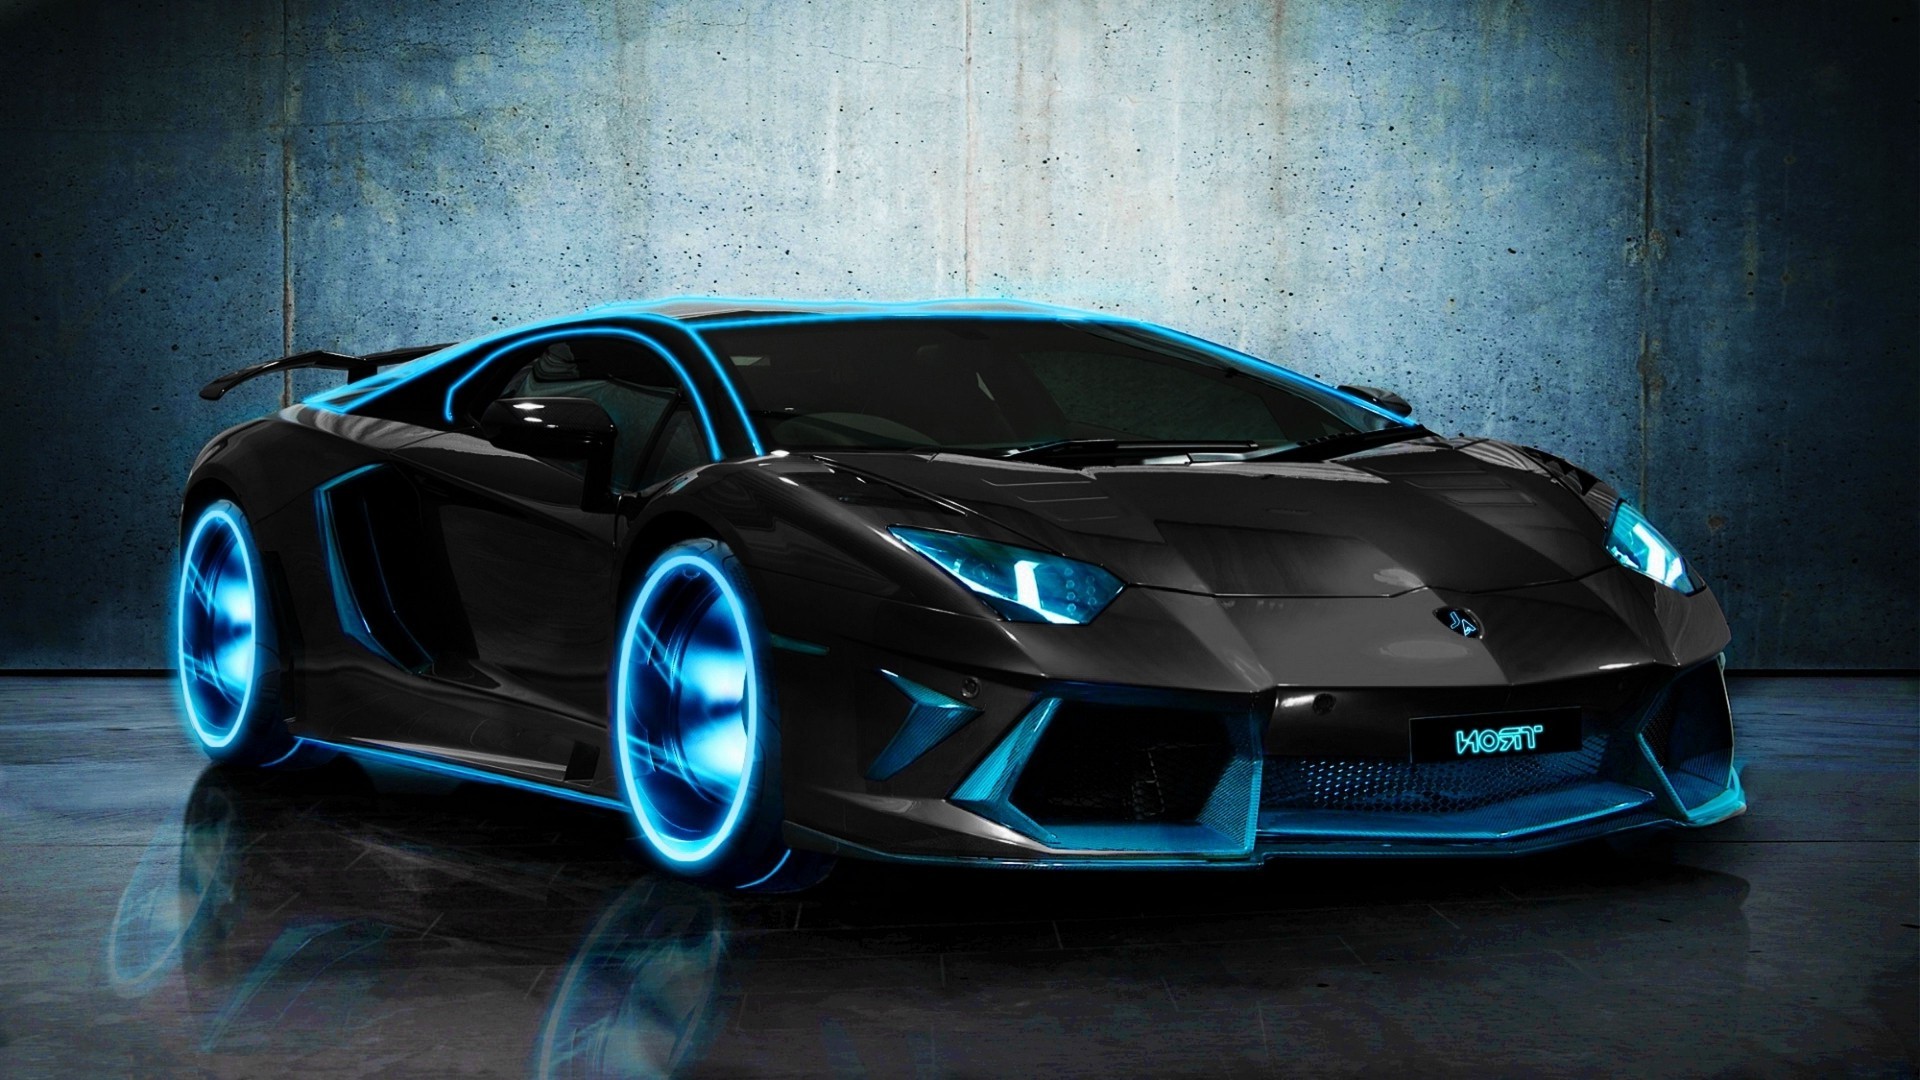 Lamborghini Car Wallpaper Check Out These Amazing HD